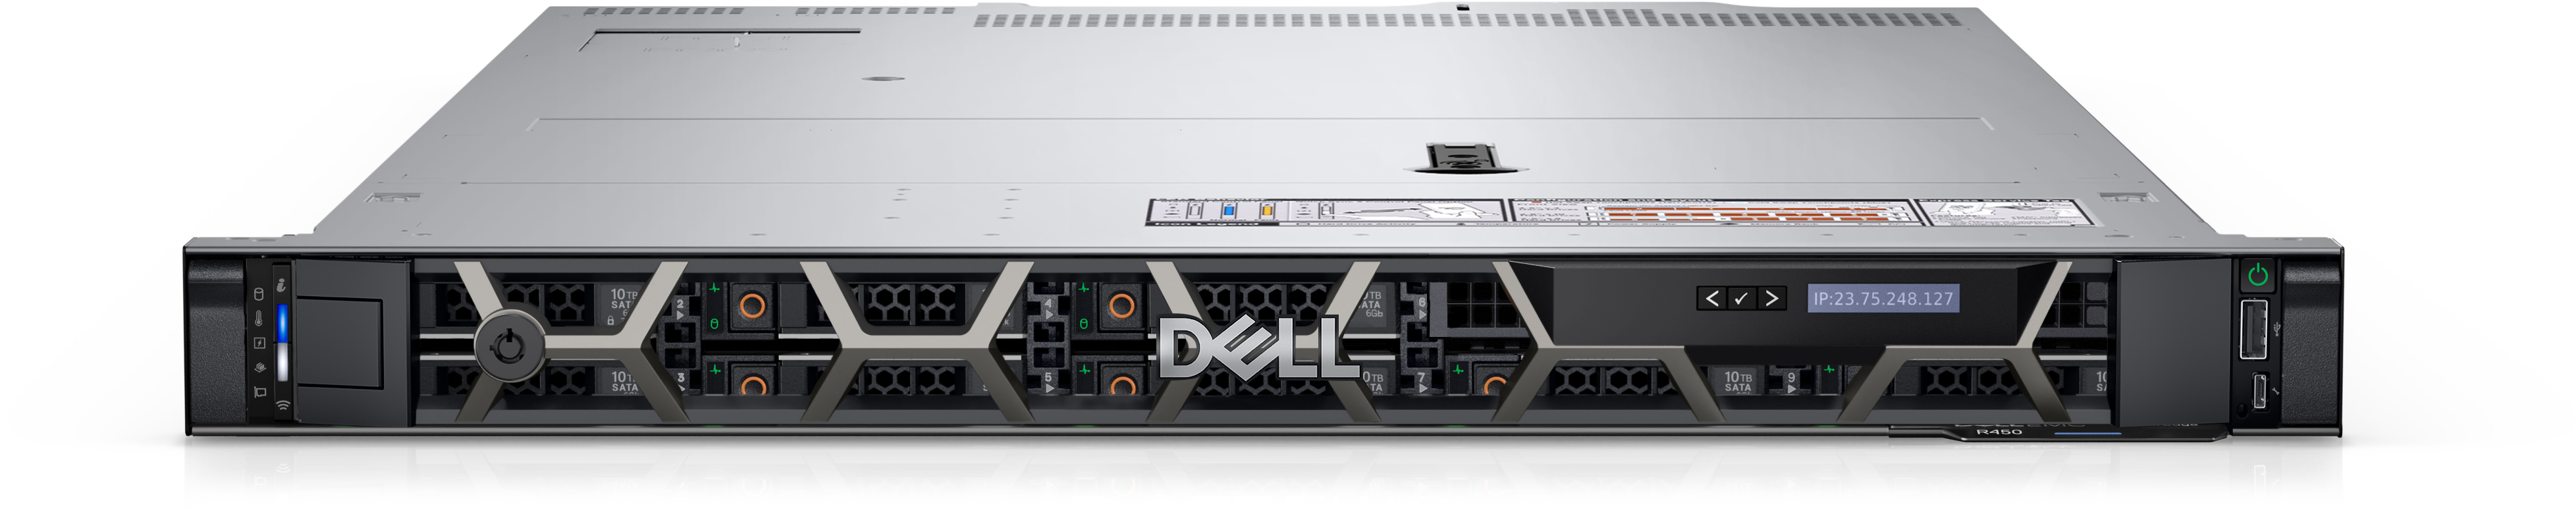 Dell EMC PowerEdge R450ラックサーバー | Dell 日本